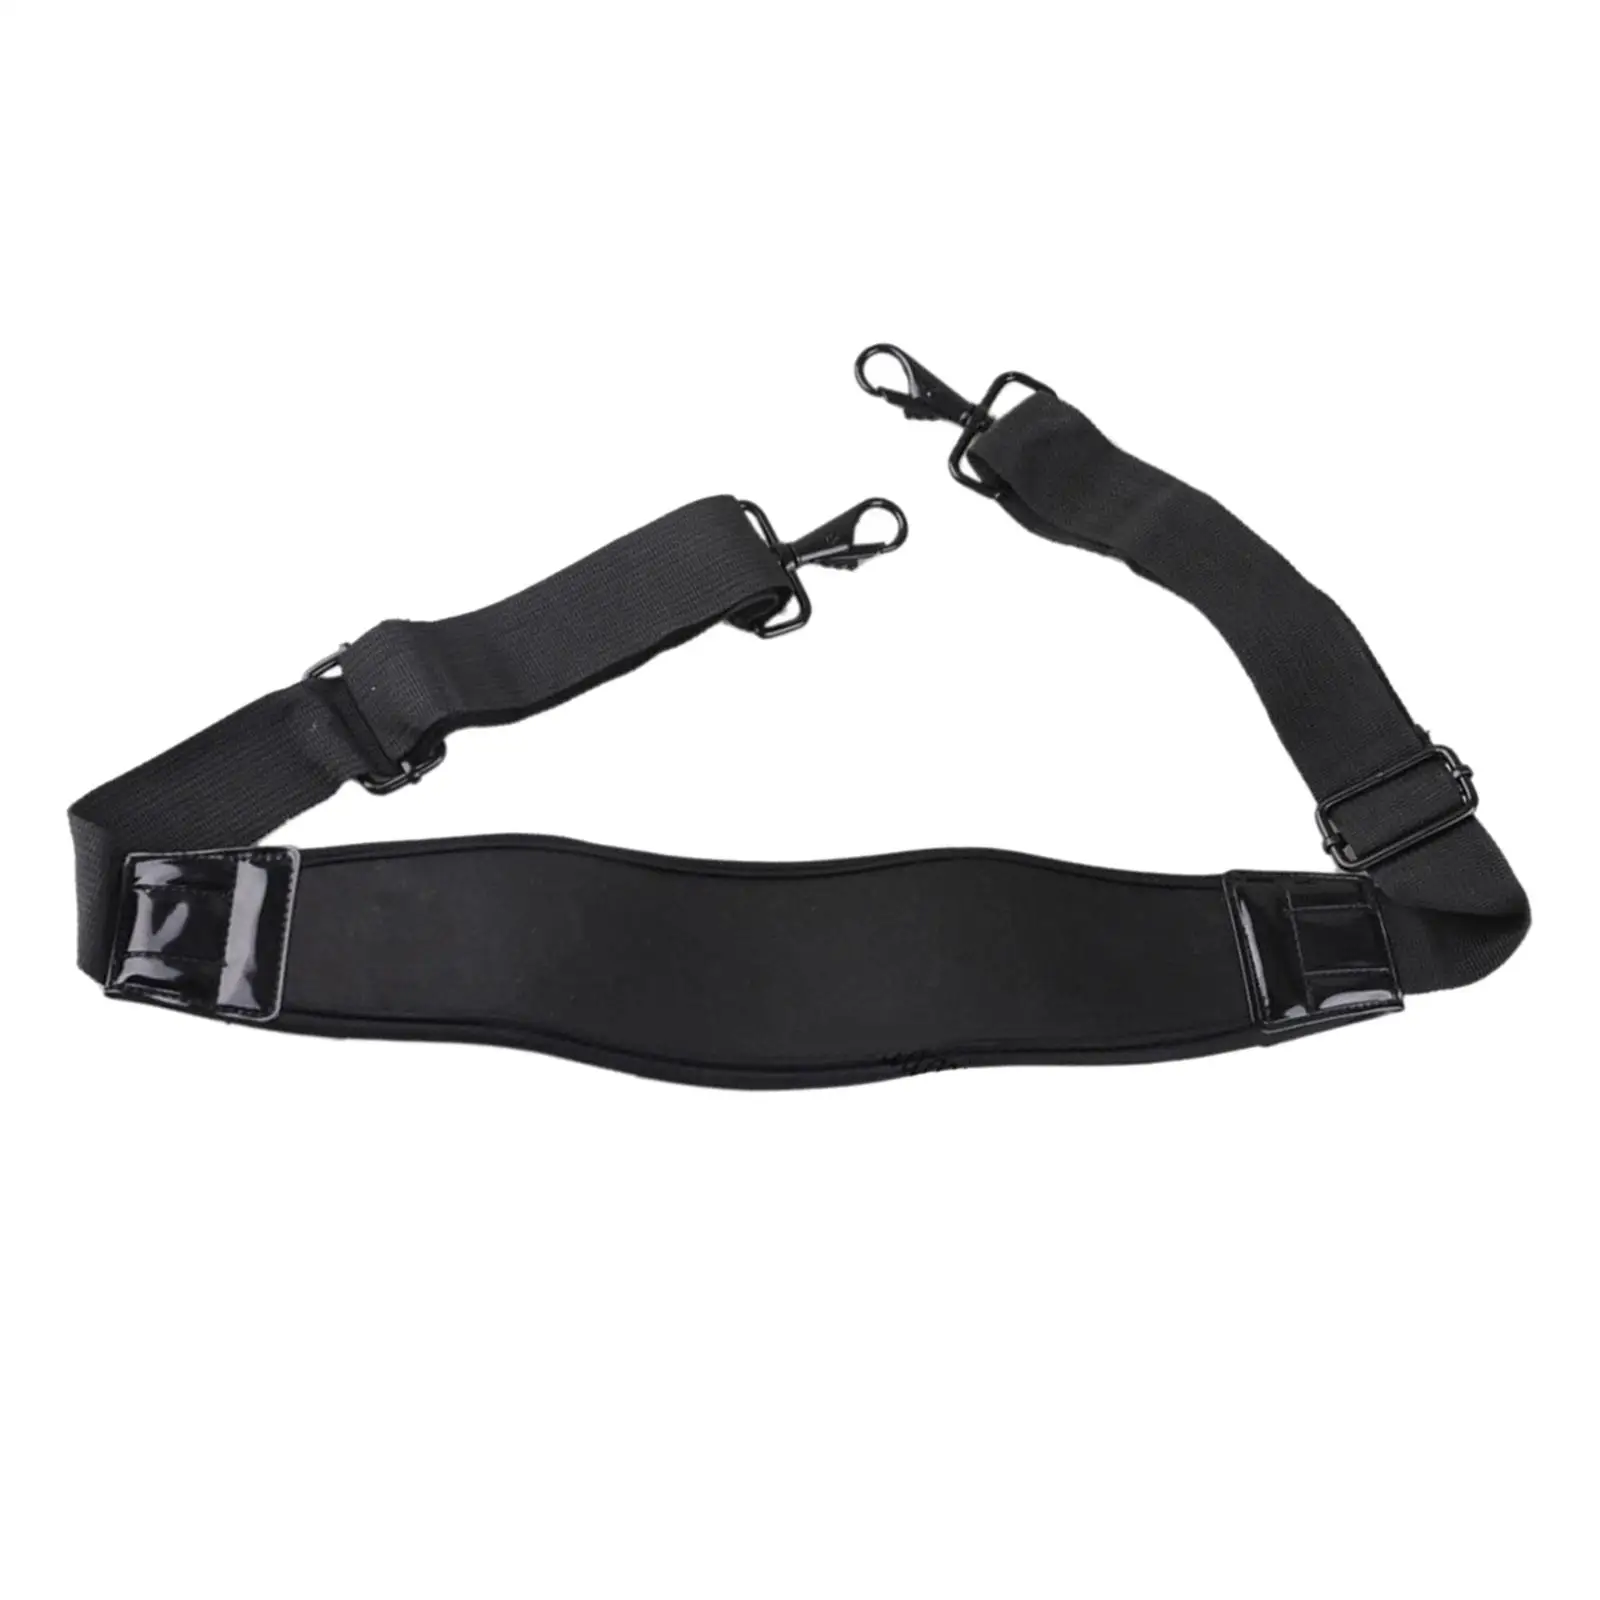 Shoulder Strap Thick Comfortable 52inch Soft with Metal Hooks Black Adjustable for Camera